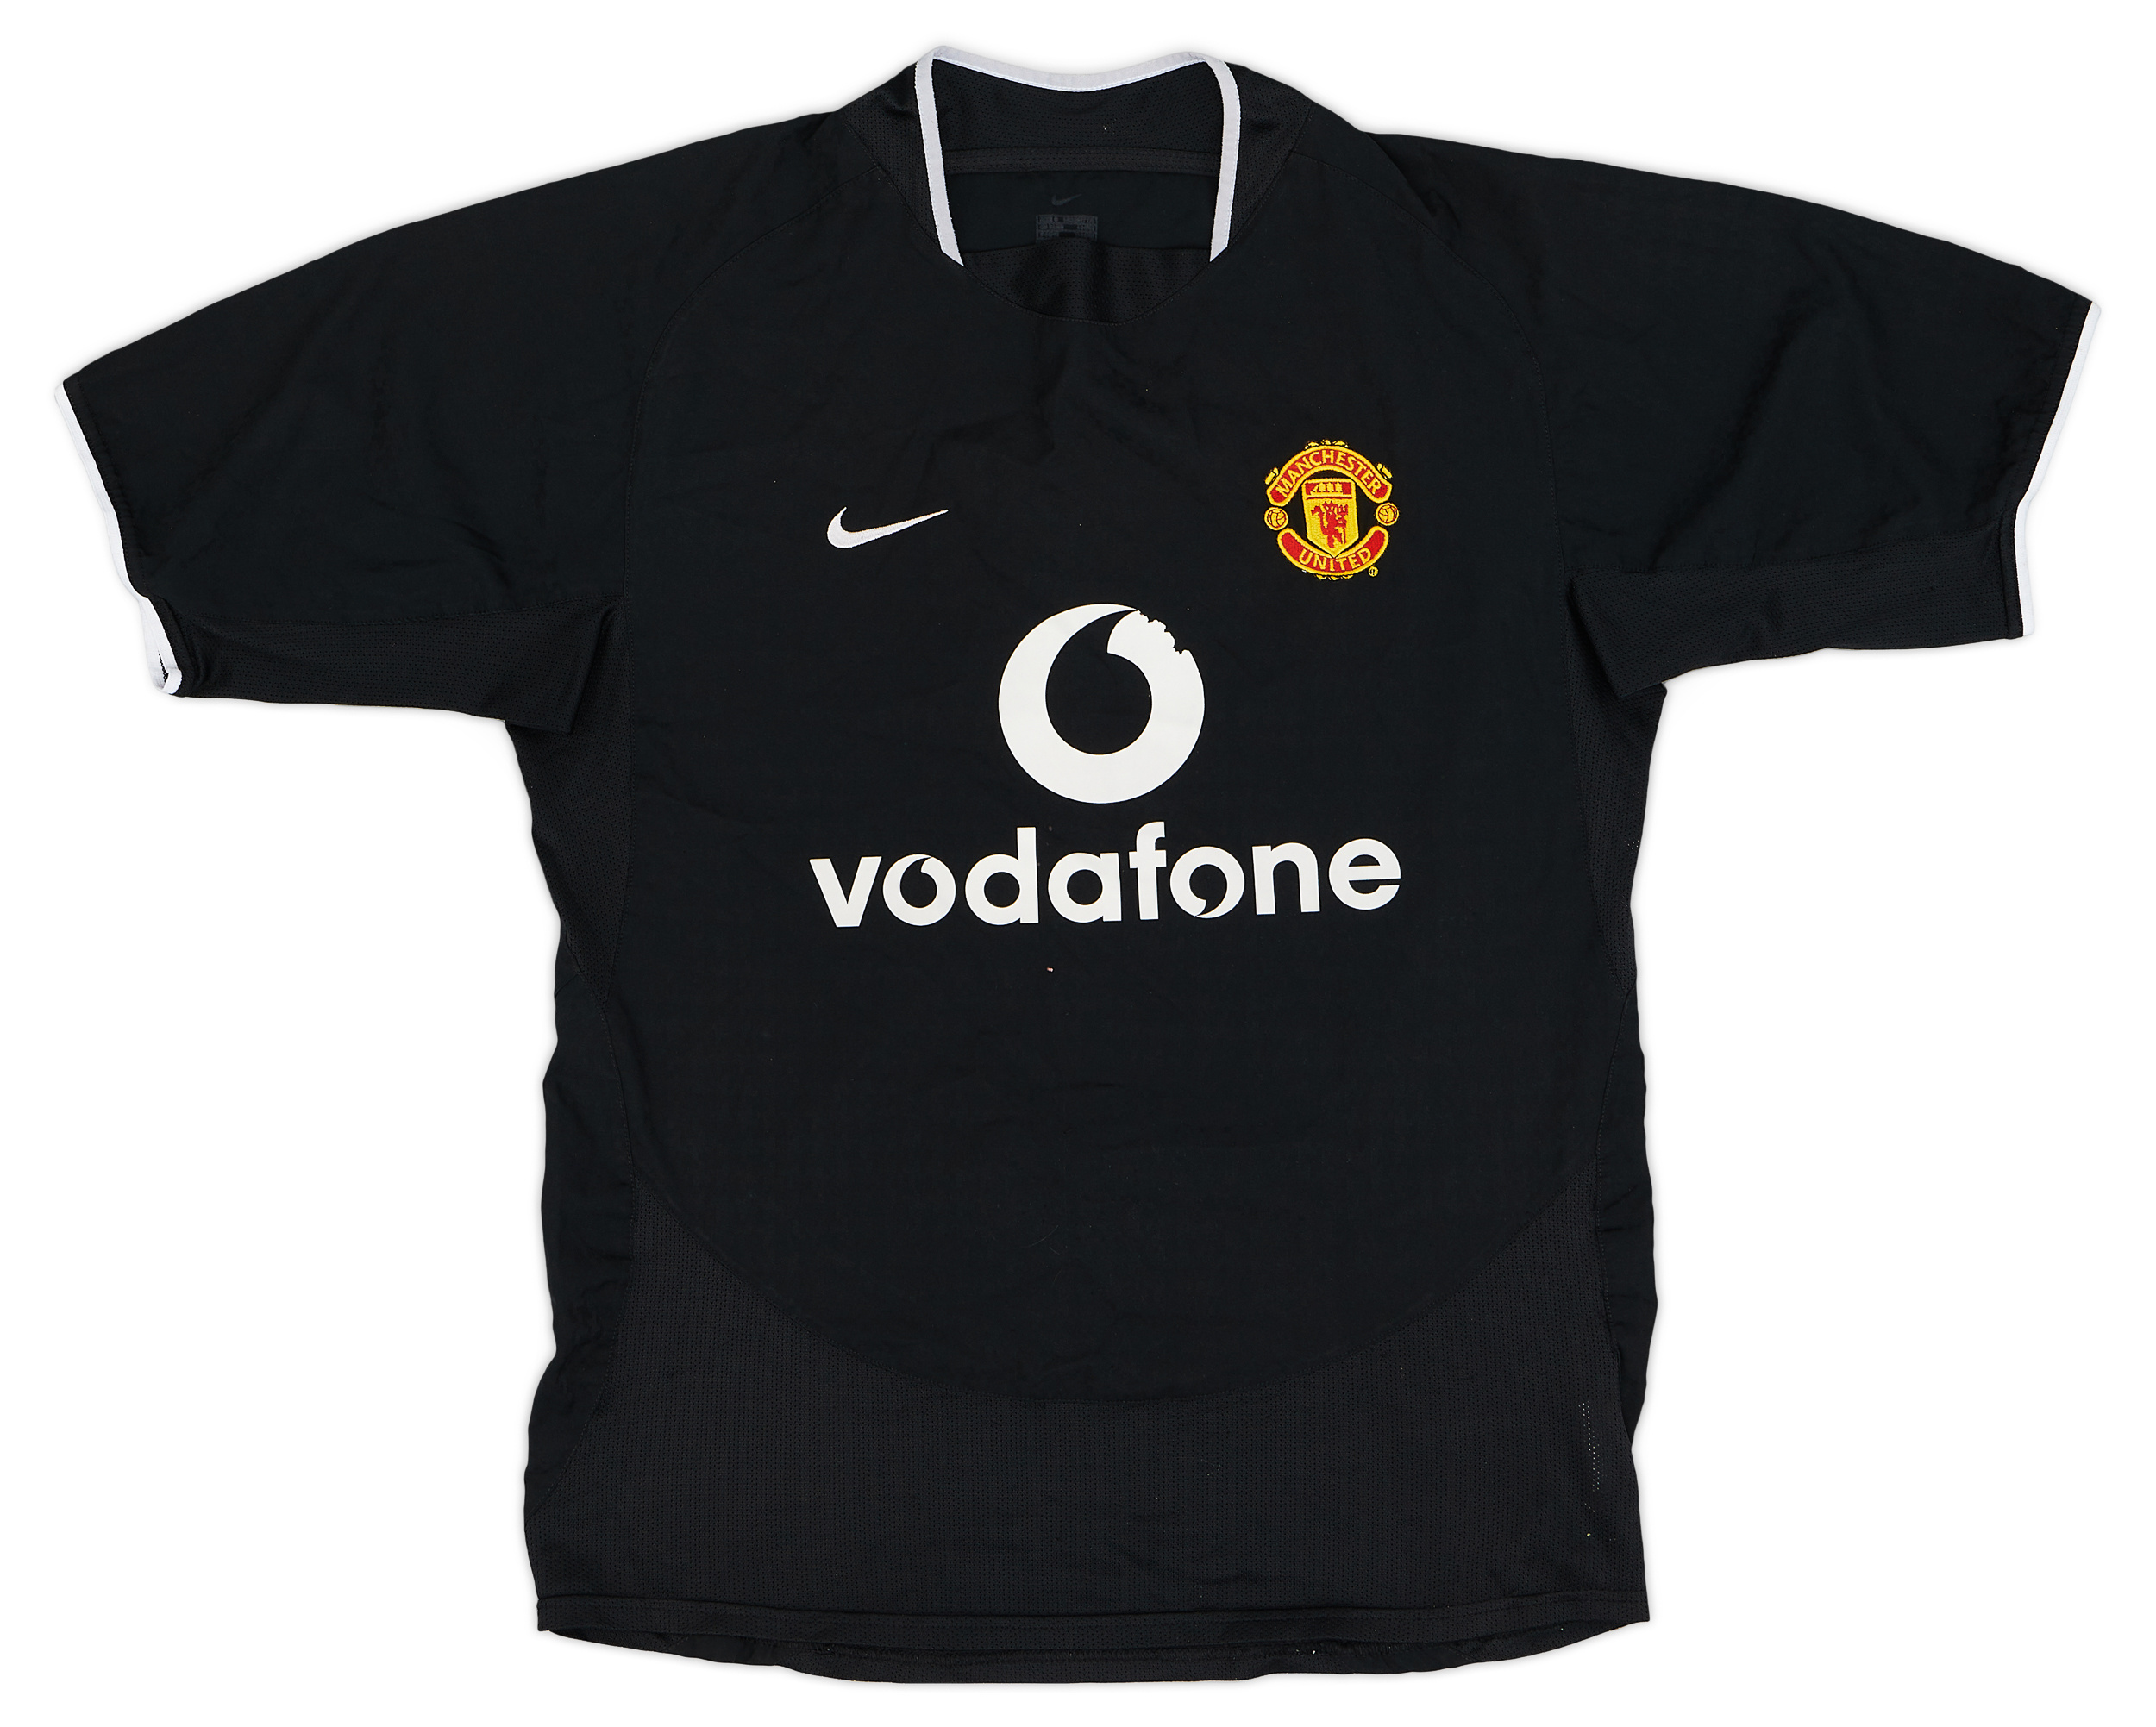 2003-05 Manchester United Away Shirt - Very Good 7/10 - ()